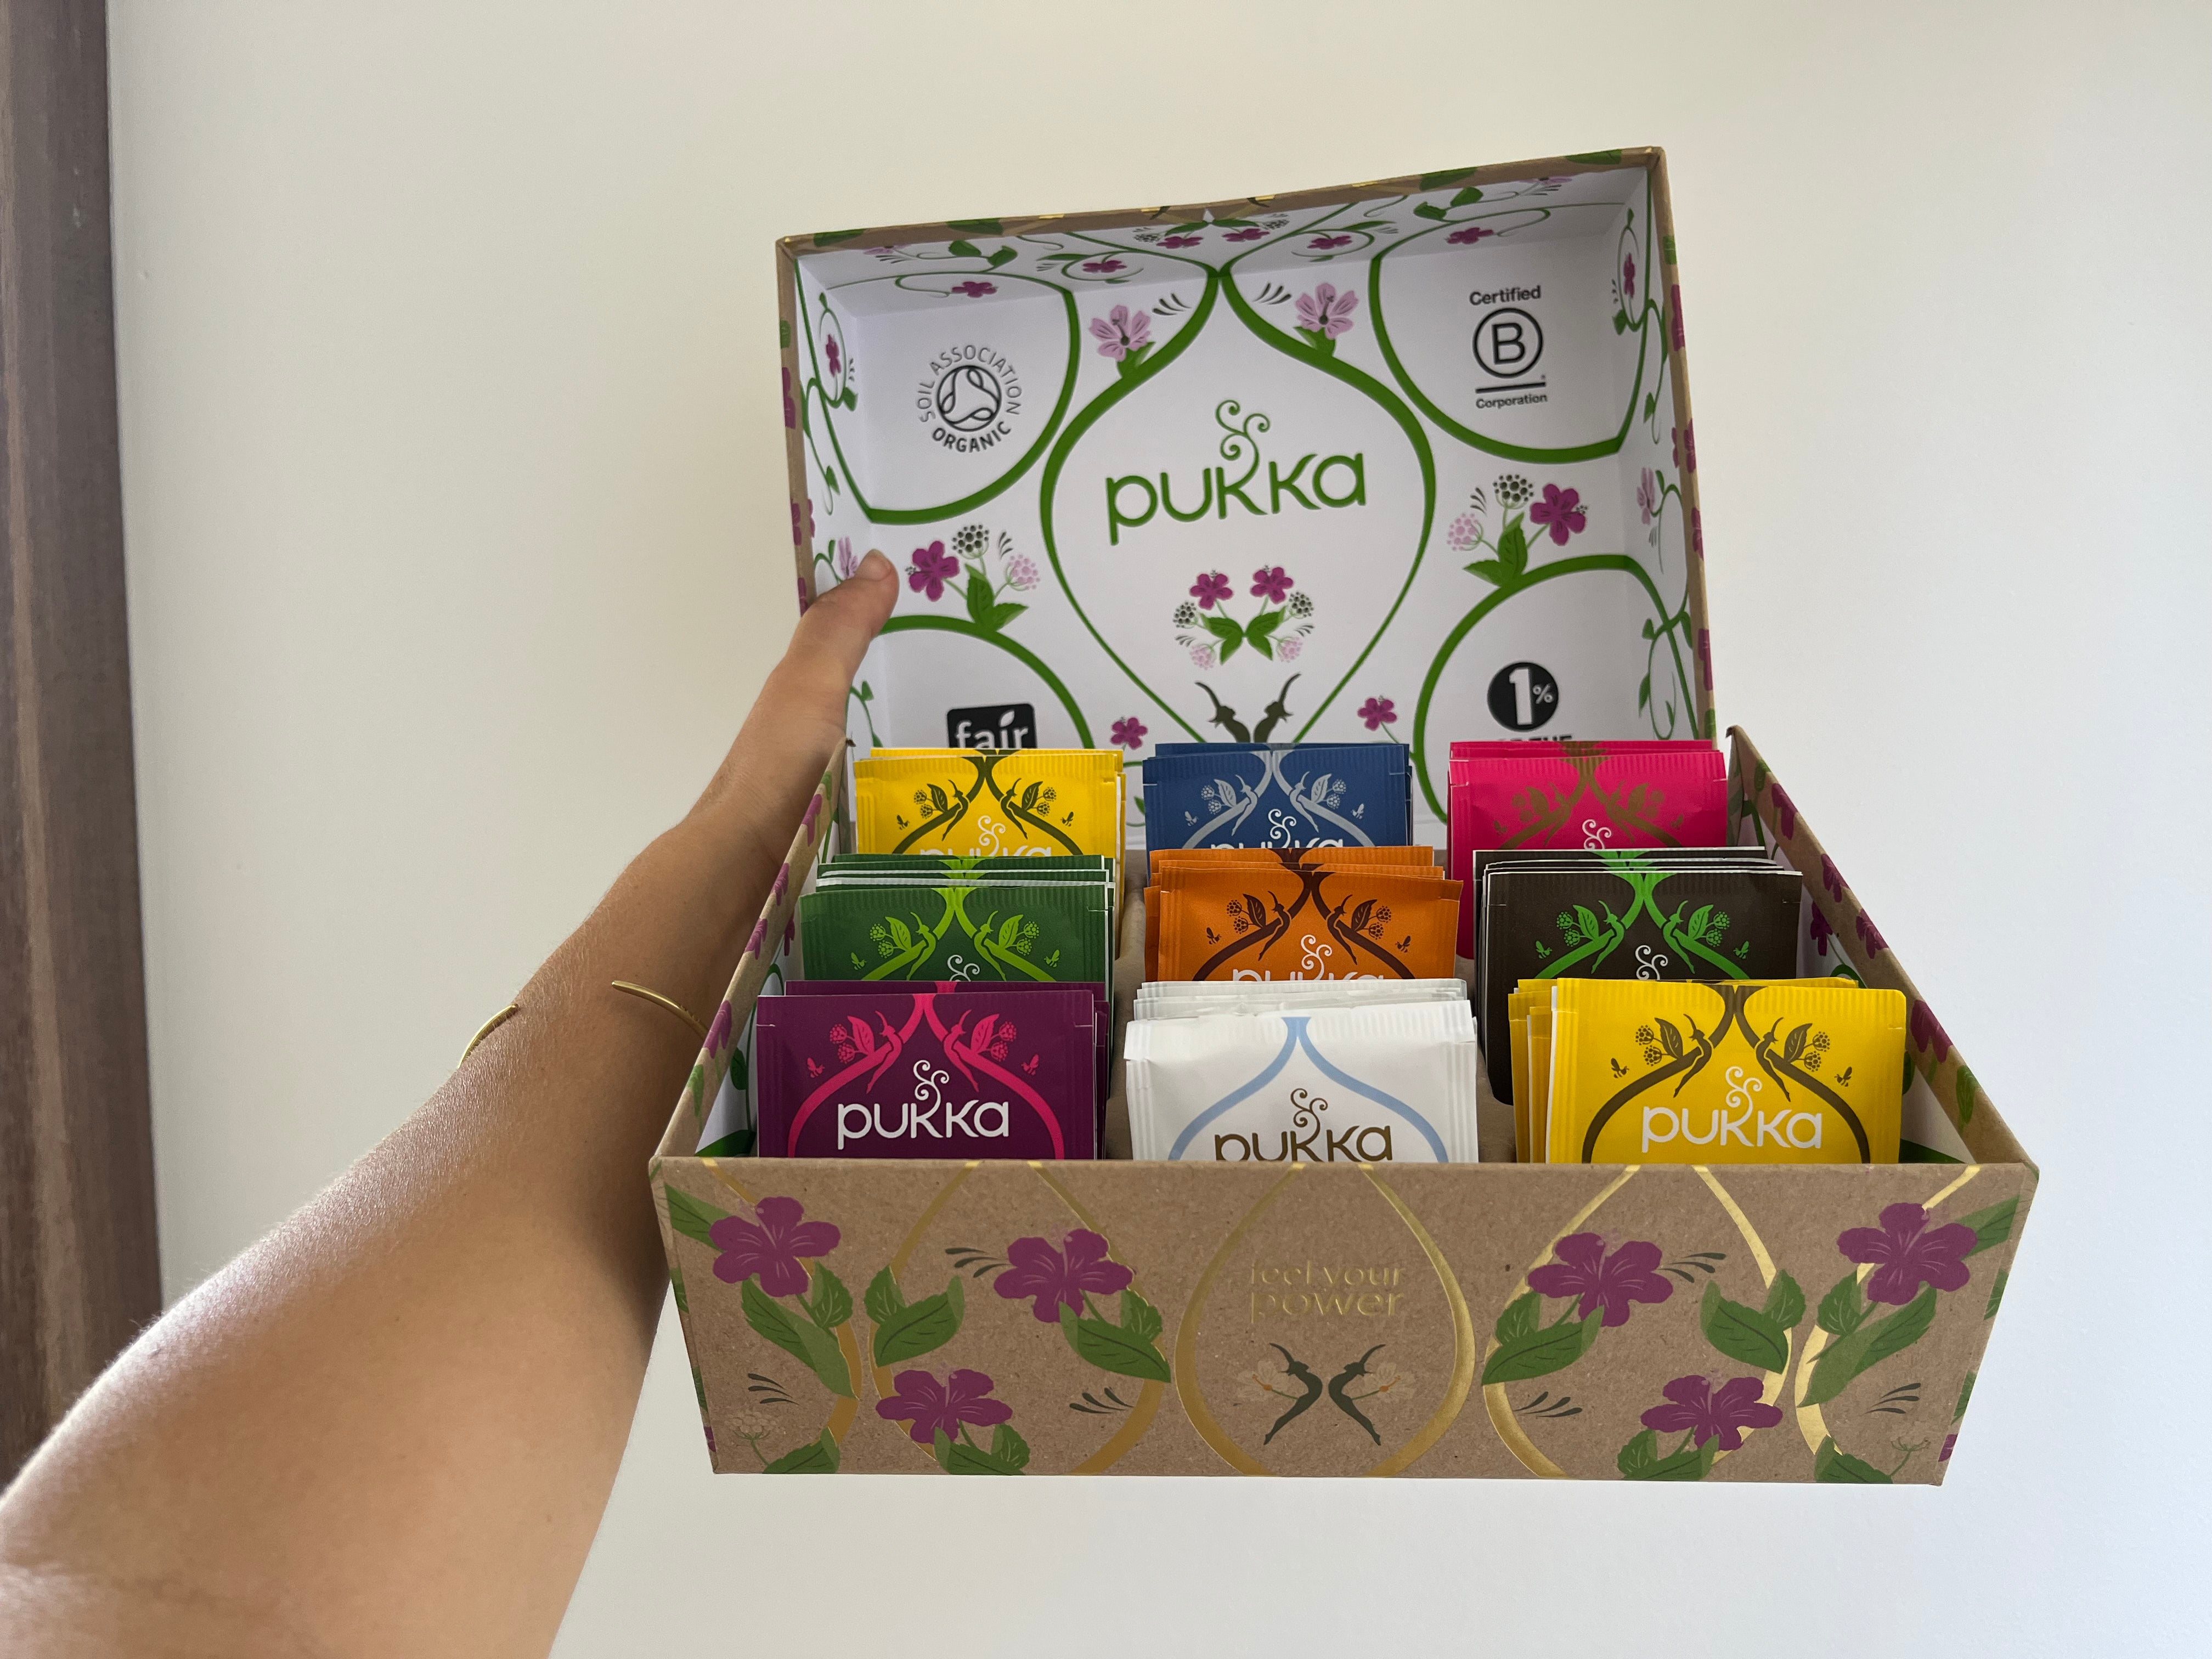 PUKKA Organic Tea Selection Box